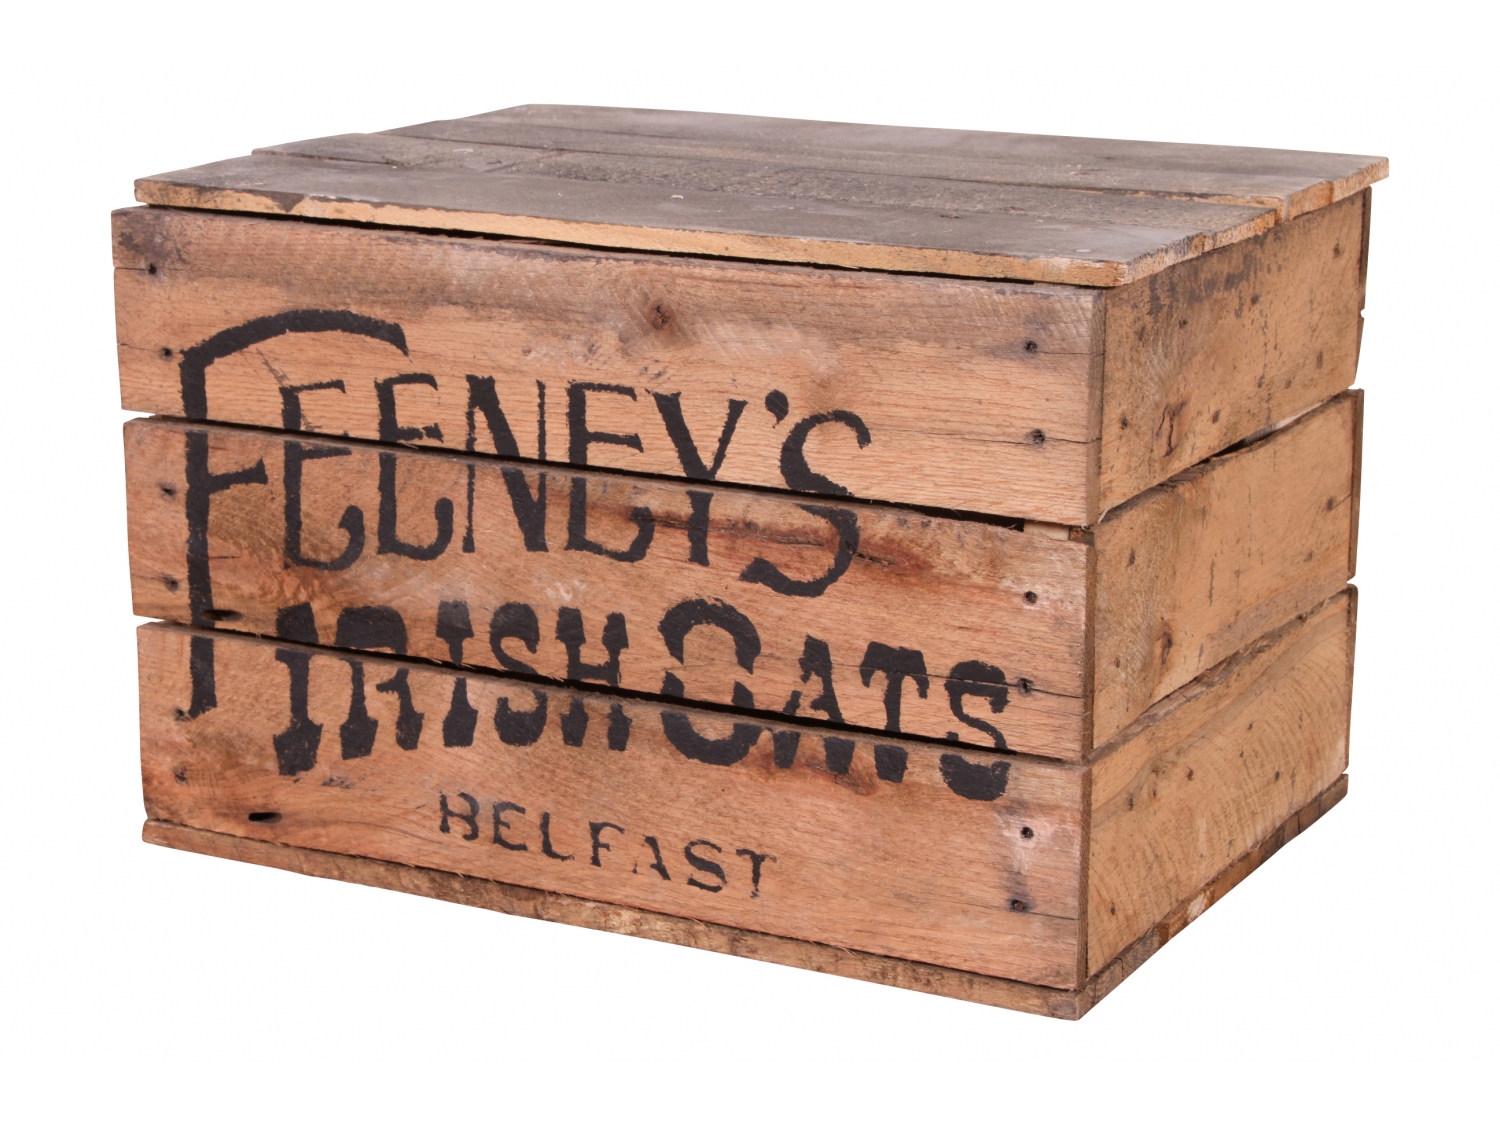 Feeney's Irish Oats Sealed Whiskey Crate #3677